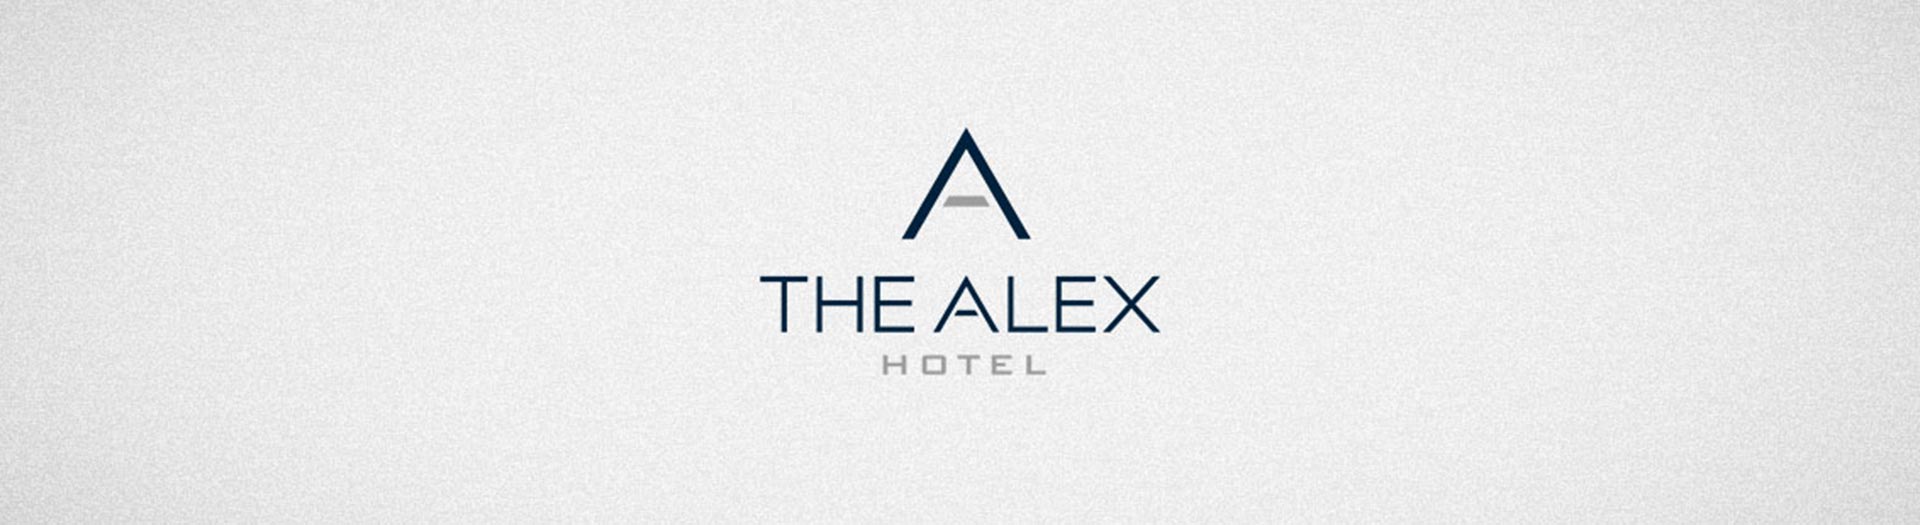 CD The Alex Hotel - tp werbeagentur